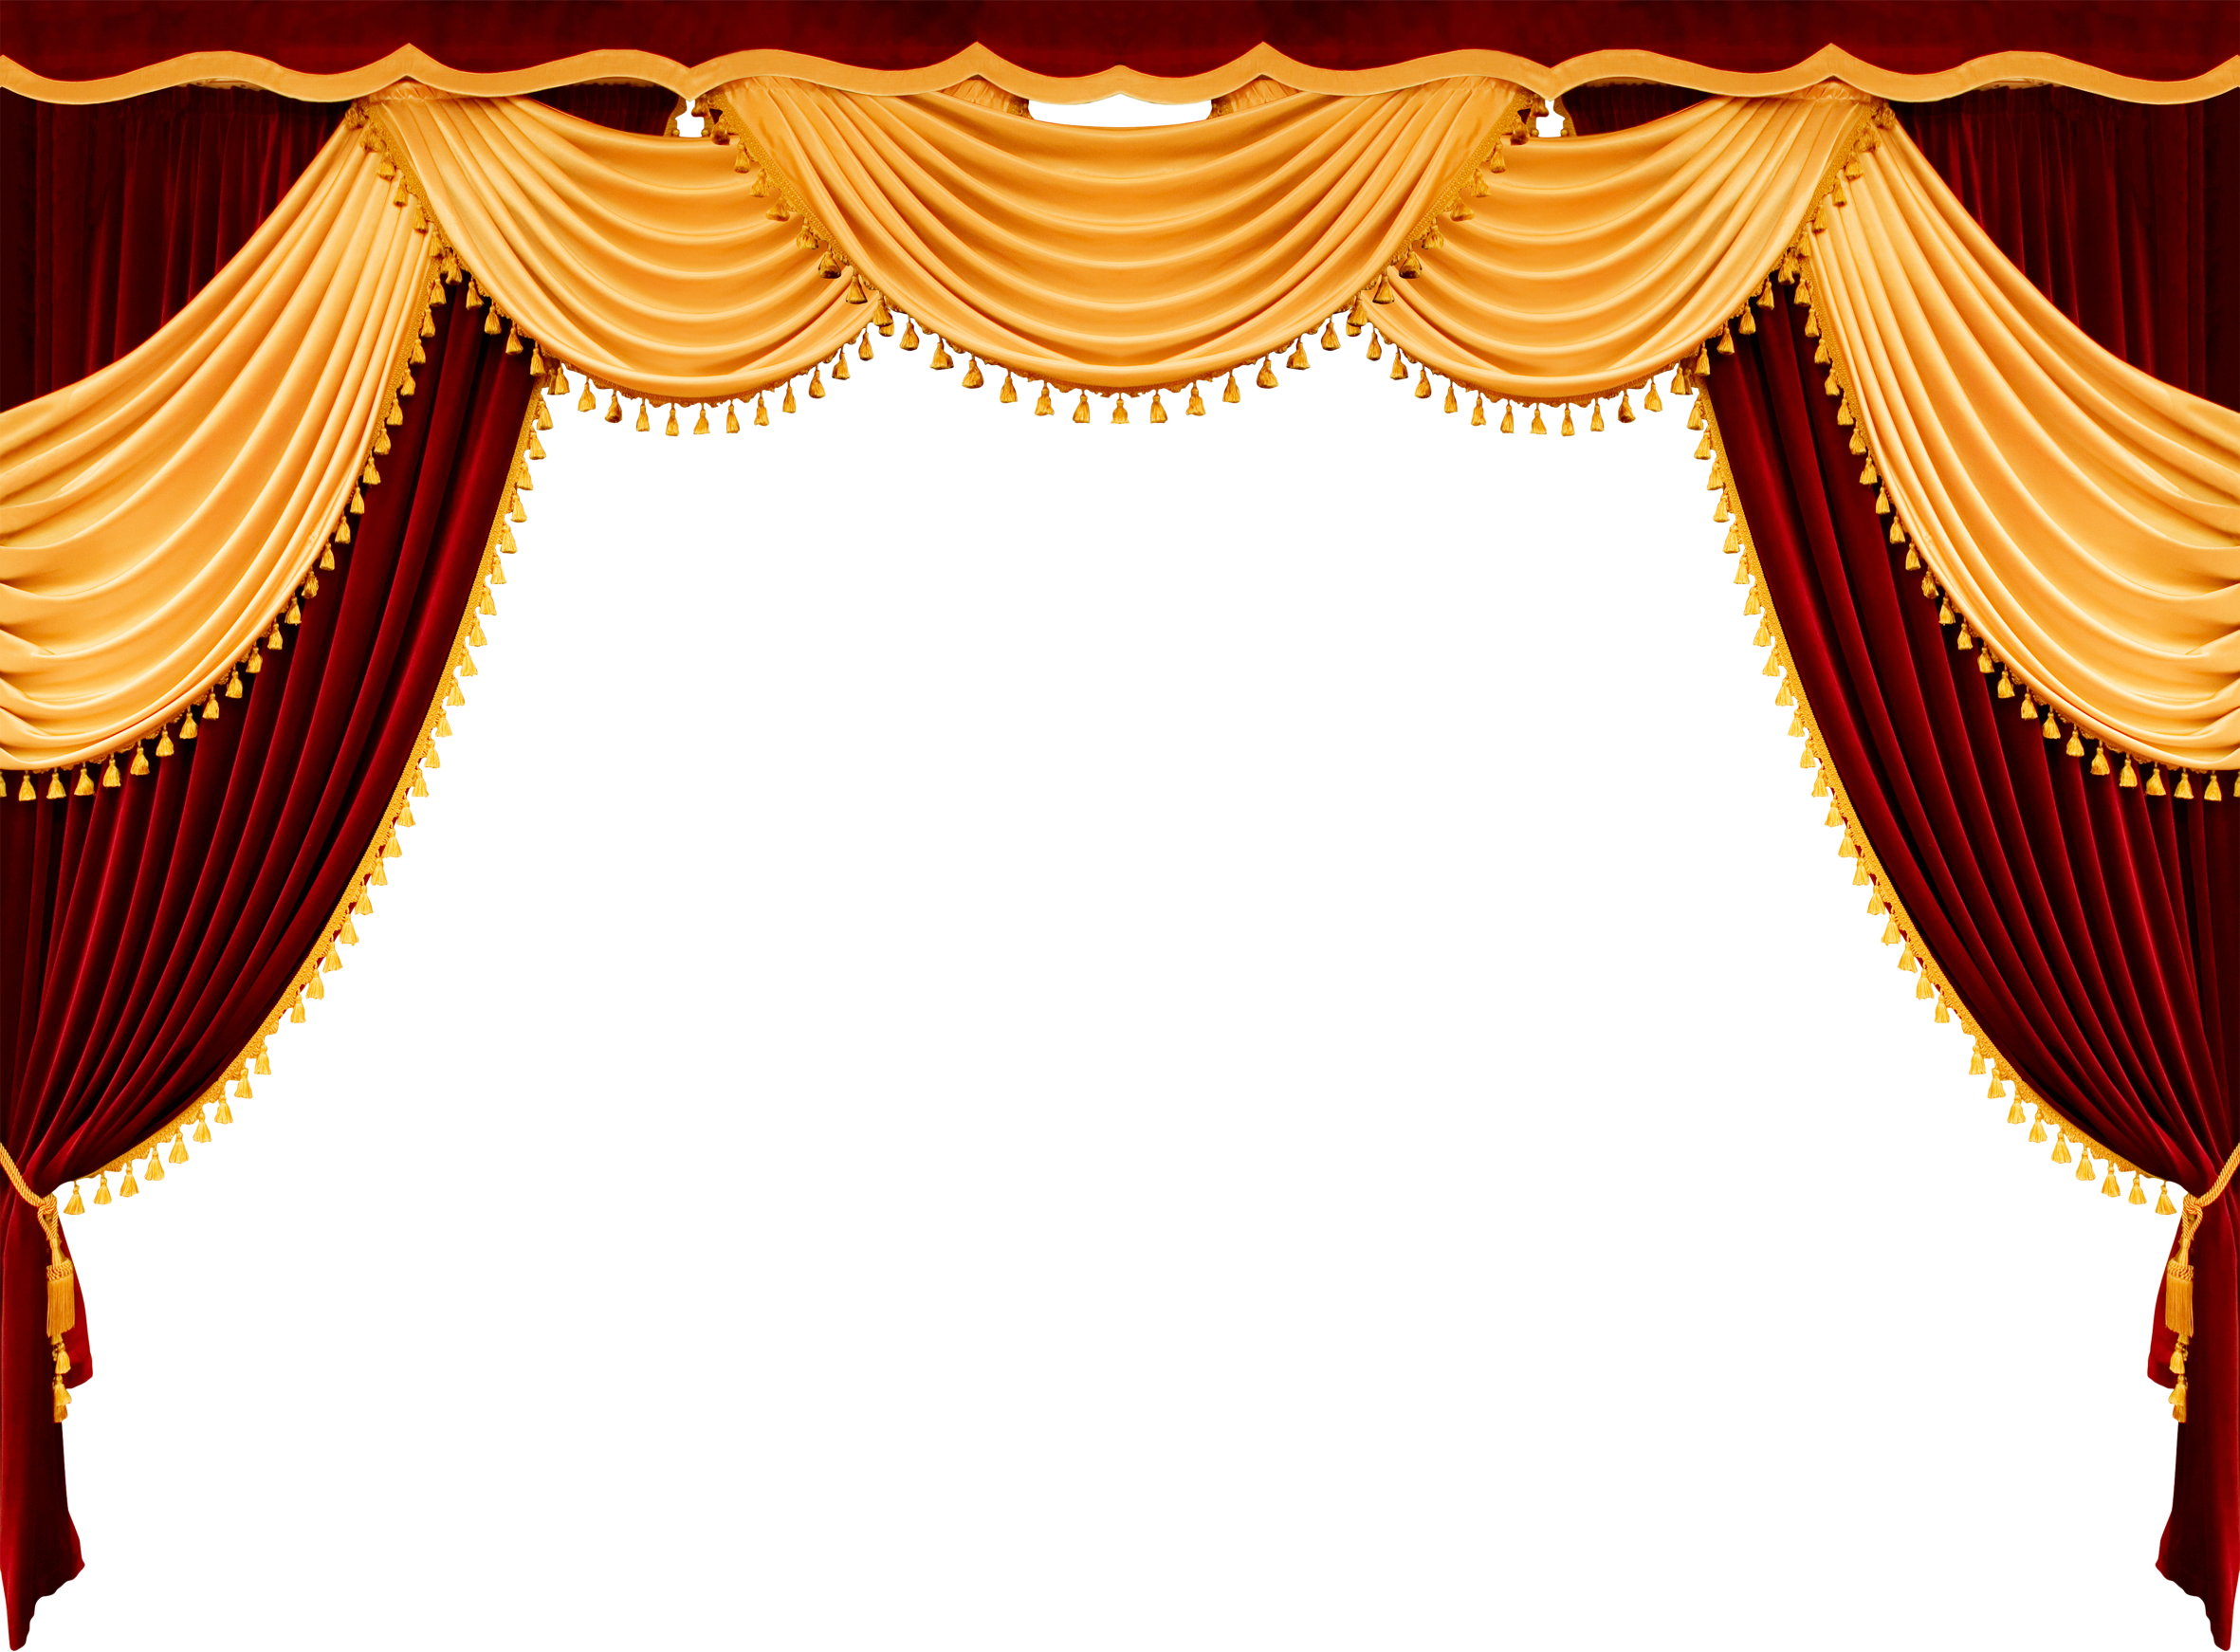 Curtains clipart gold light, Curtains gold light Transparent